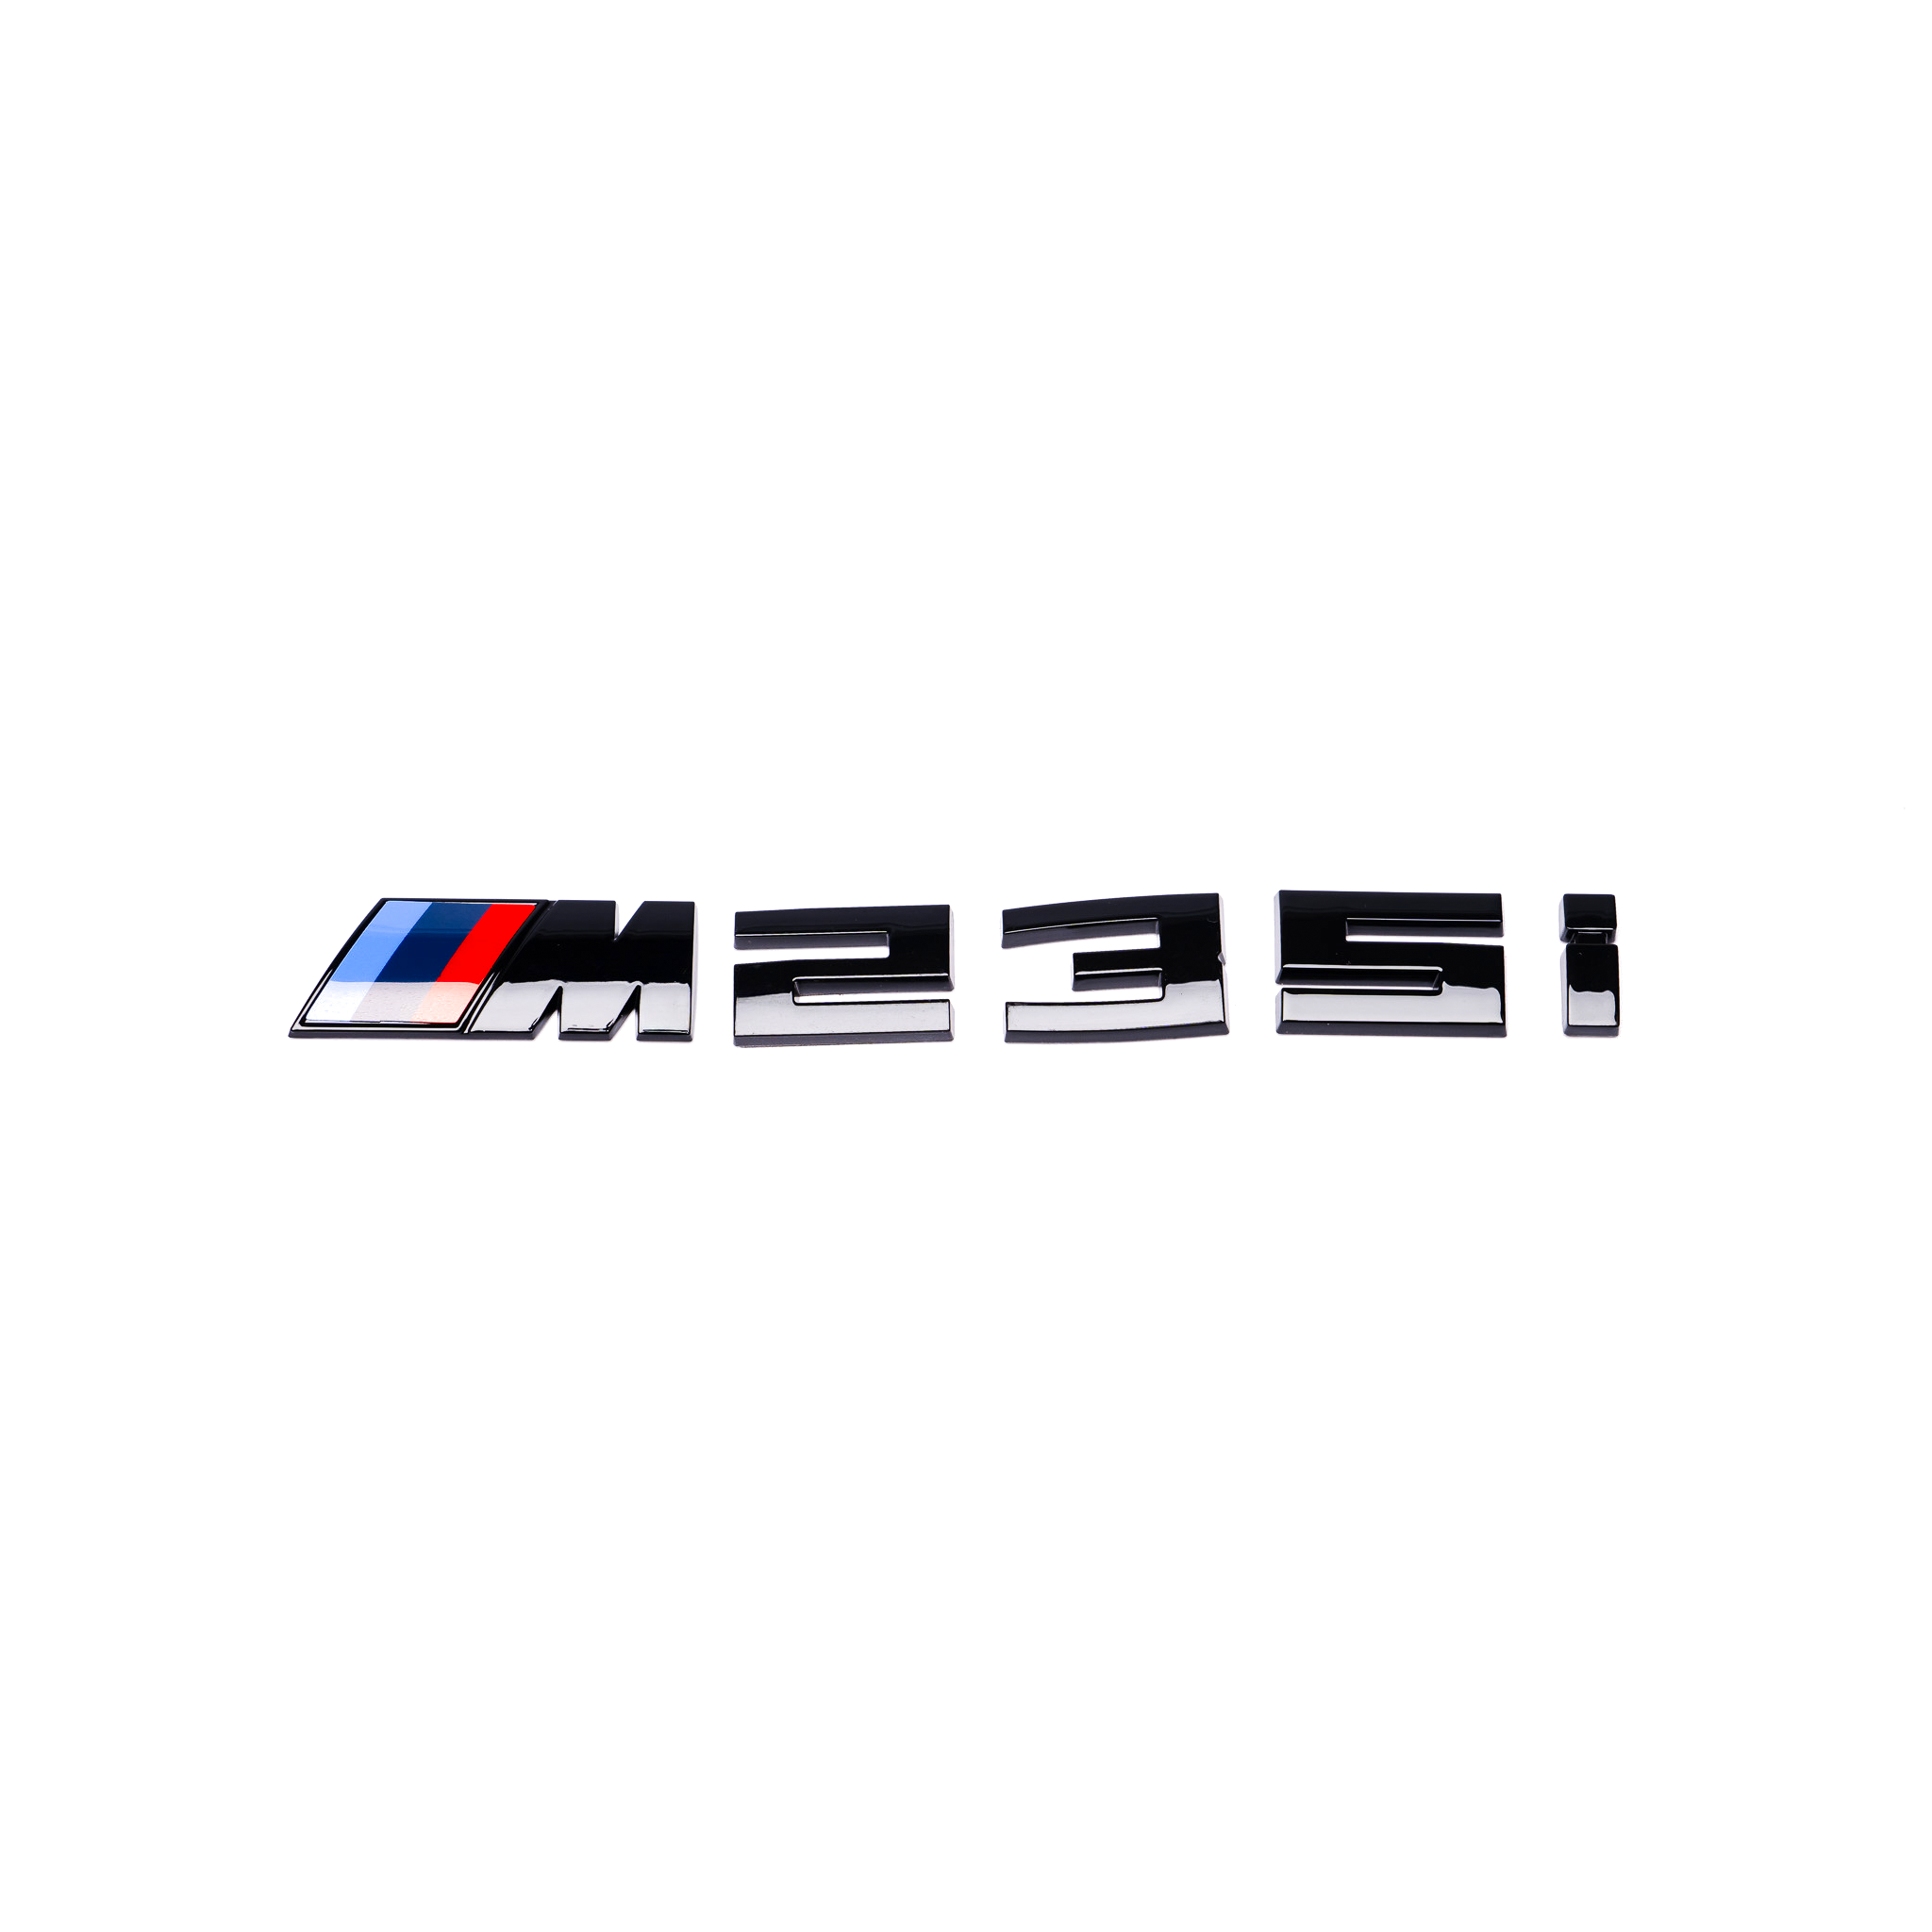 Exon Gloss Black M235i Emblema para maletero para BMW 2-Series M235i F22 F23 G42 G43